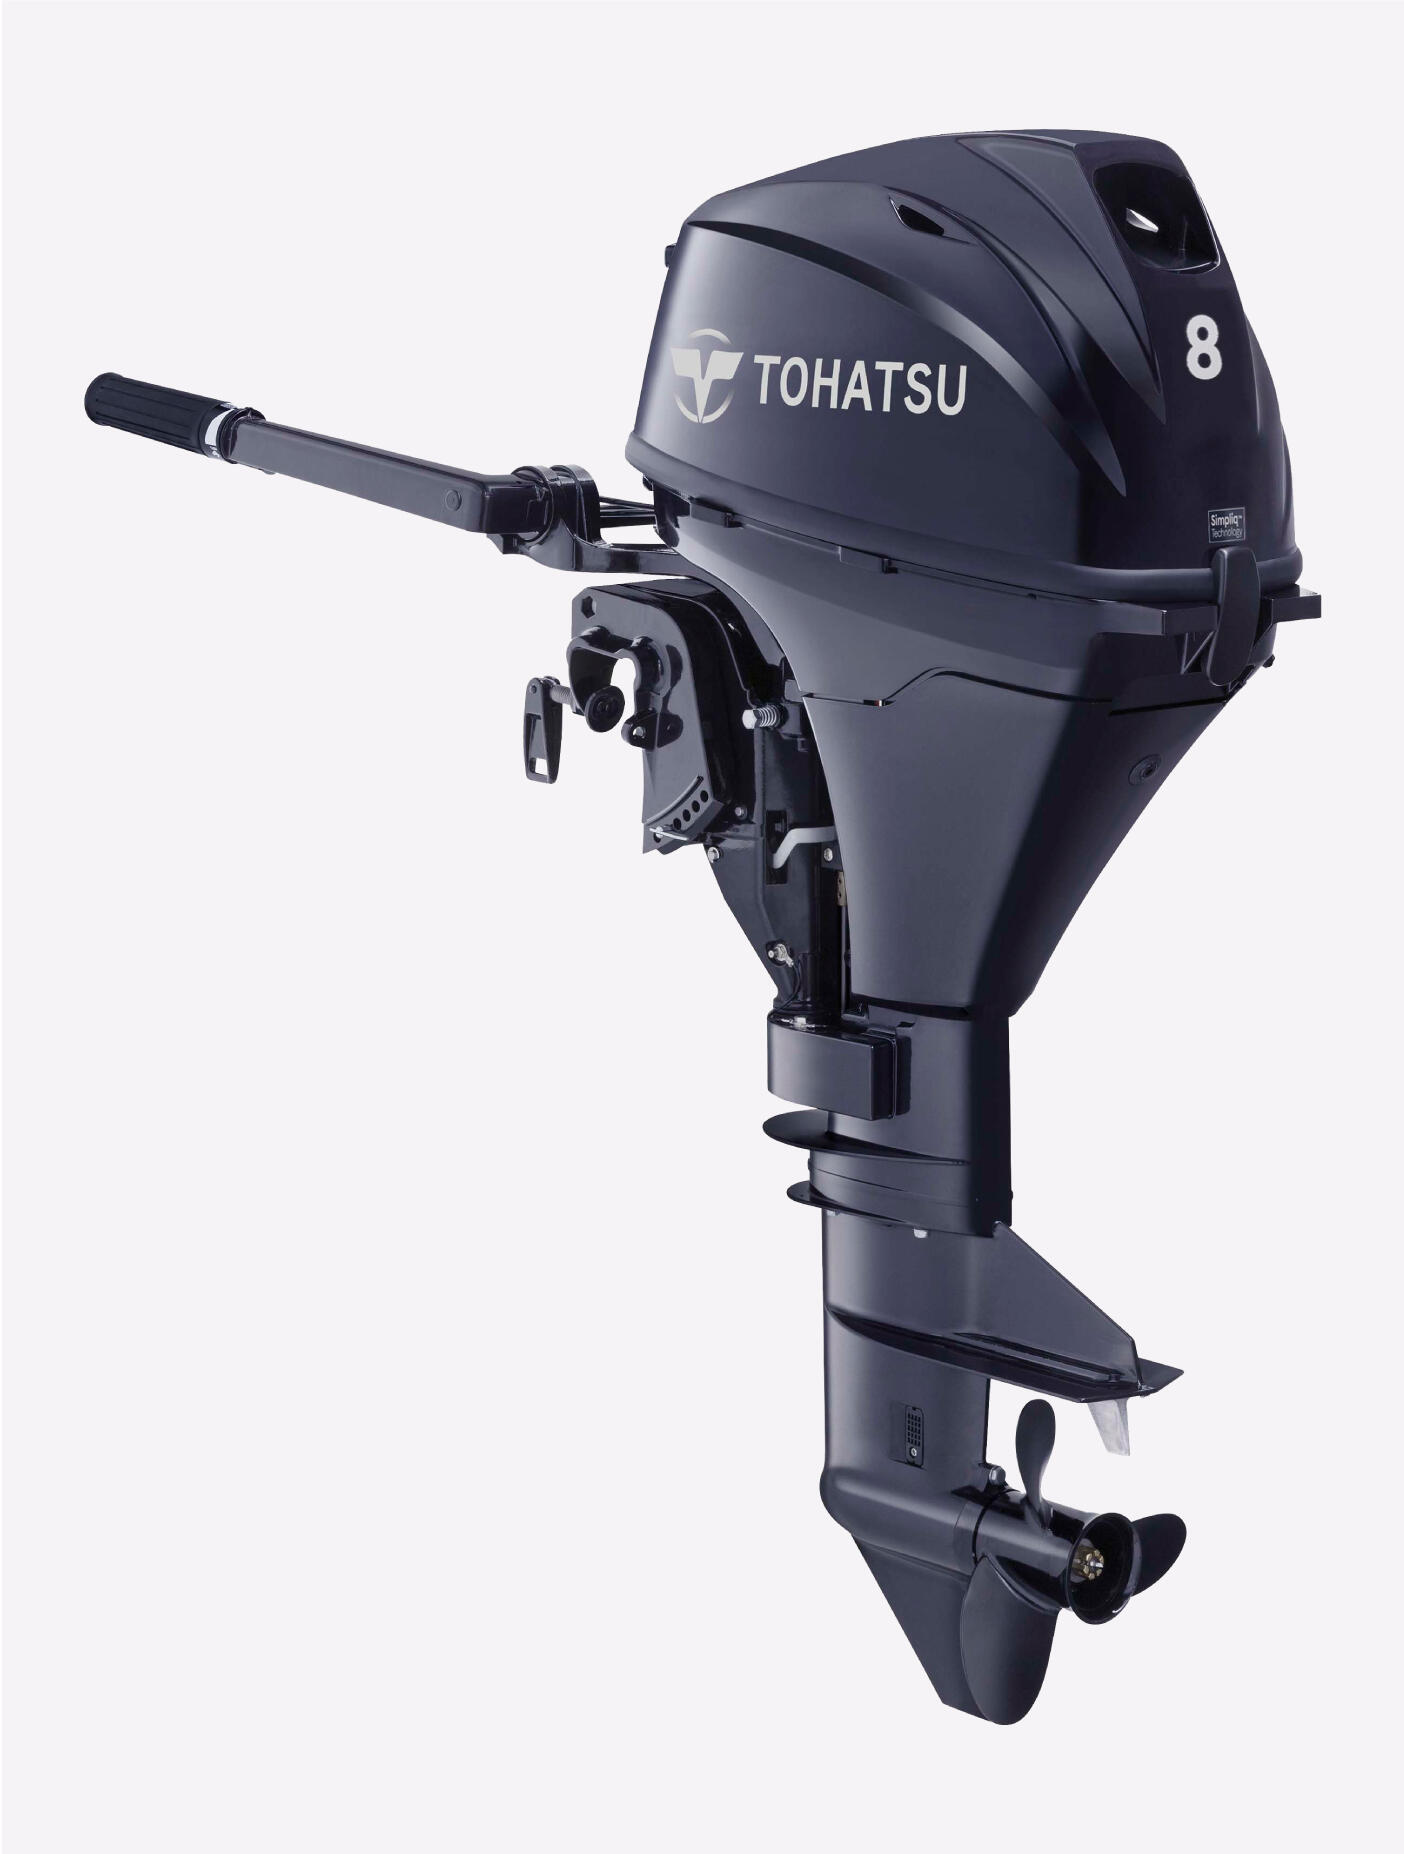 8HP Tohatsu Short Shaft Manual Start Tiller 4-Stroke Outboard Motor with 12L Tank & Line